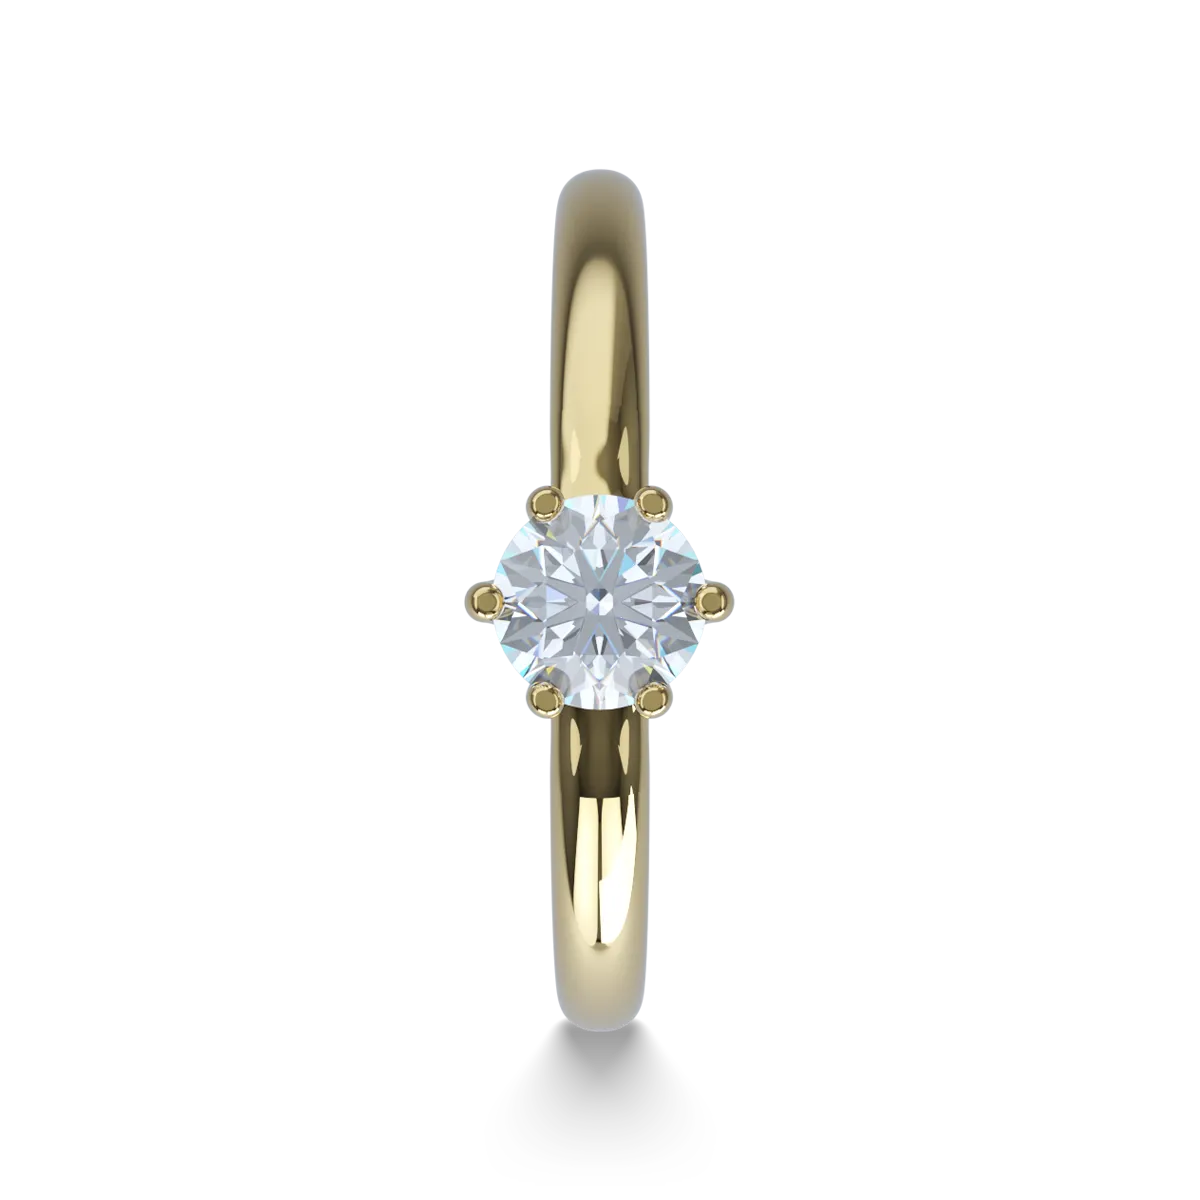 Inel de logodna din aur galben de 18K cu un diamant solitaire de 0.31ct